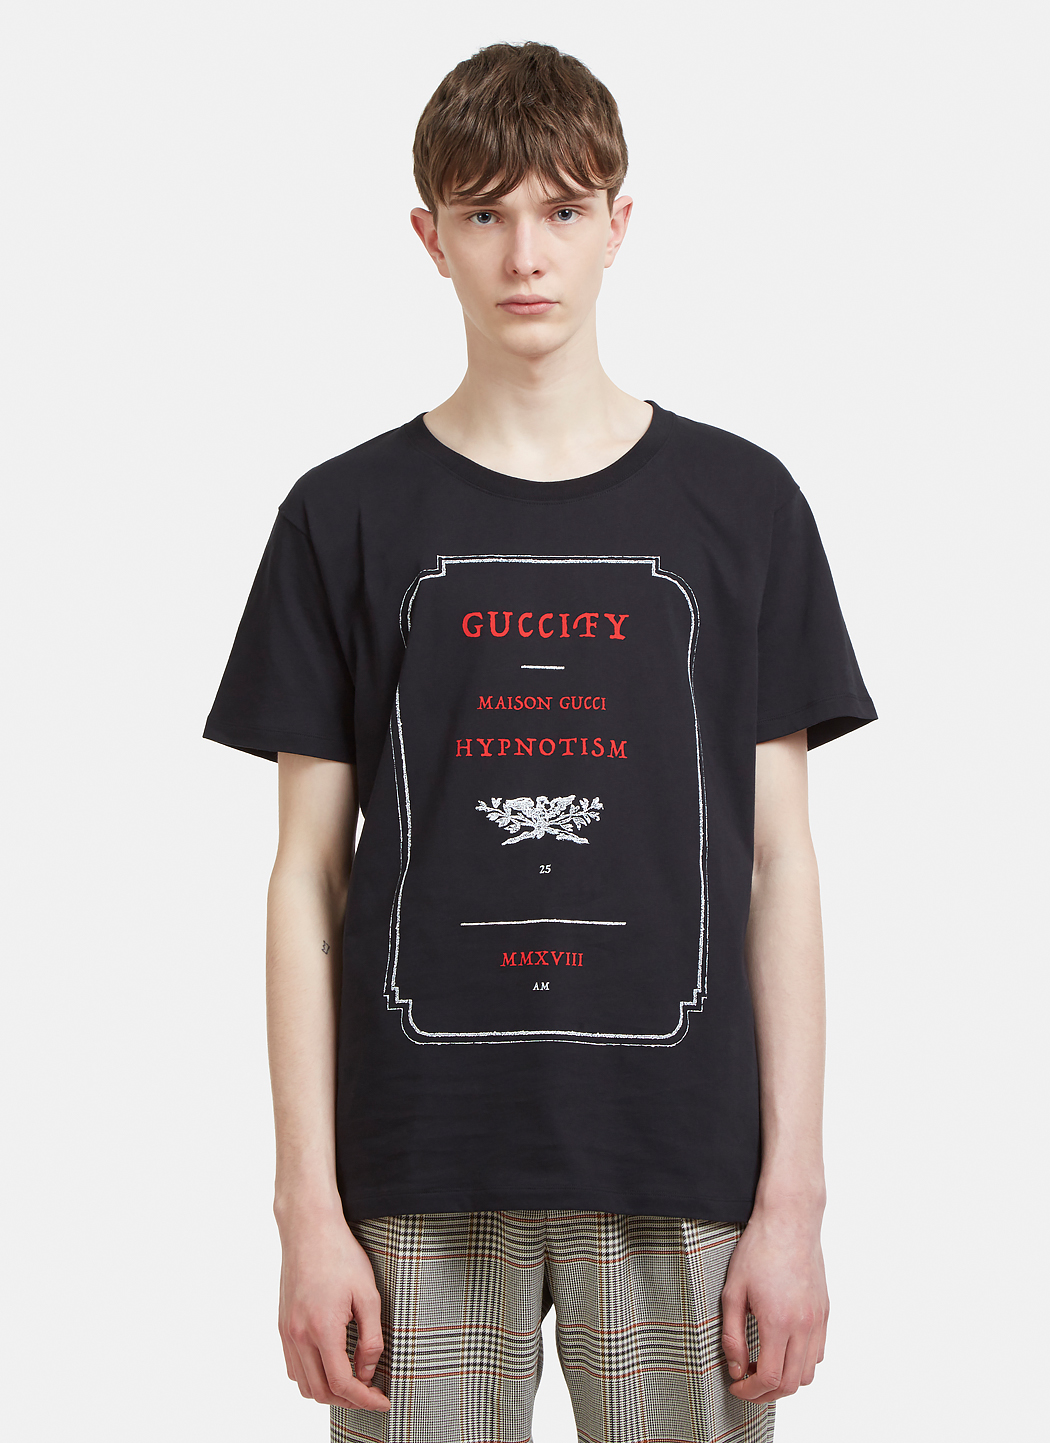 Gucci Guccify Hypnotism T-Shirt in Black | LN-CC